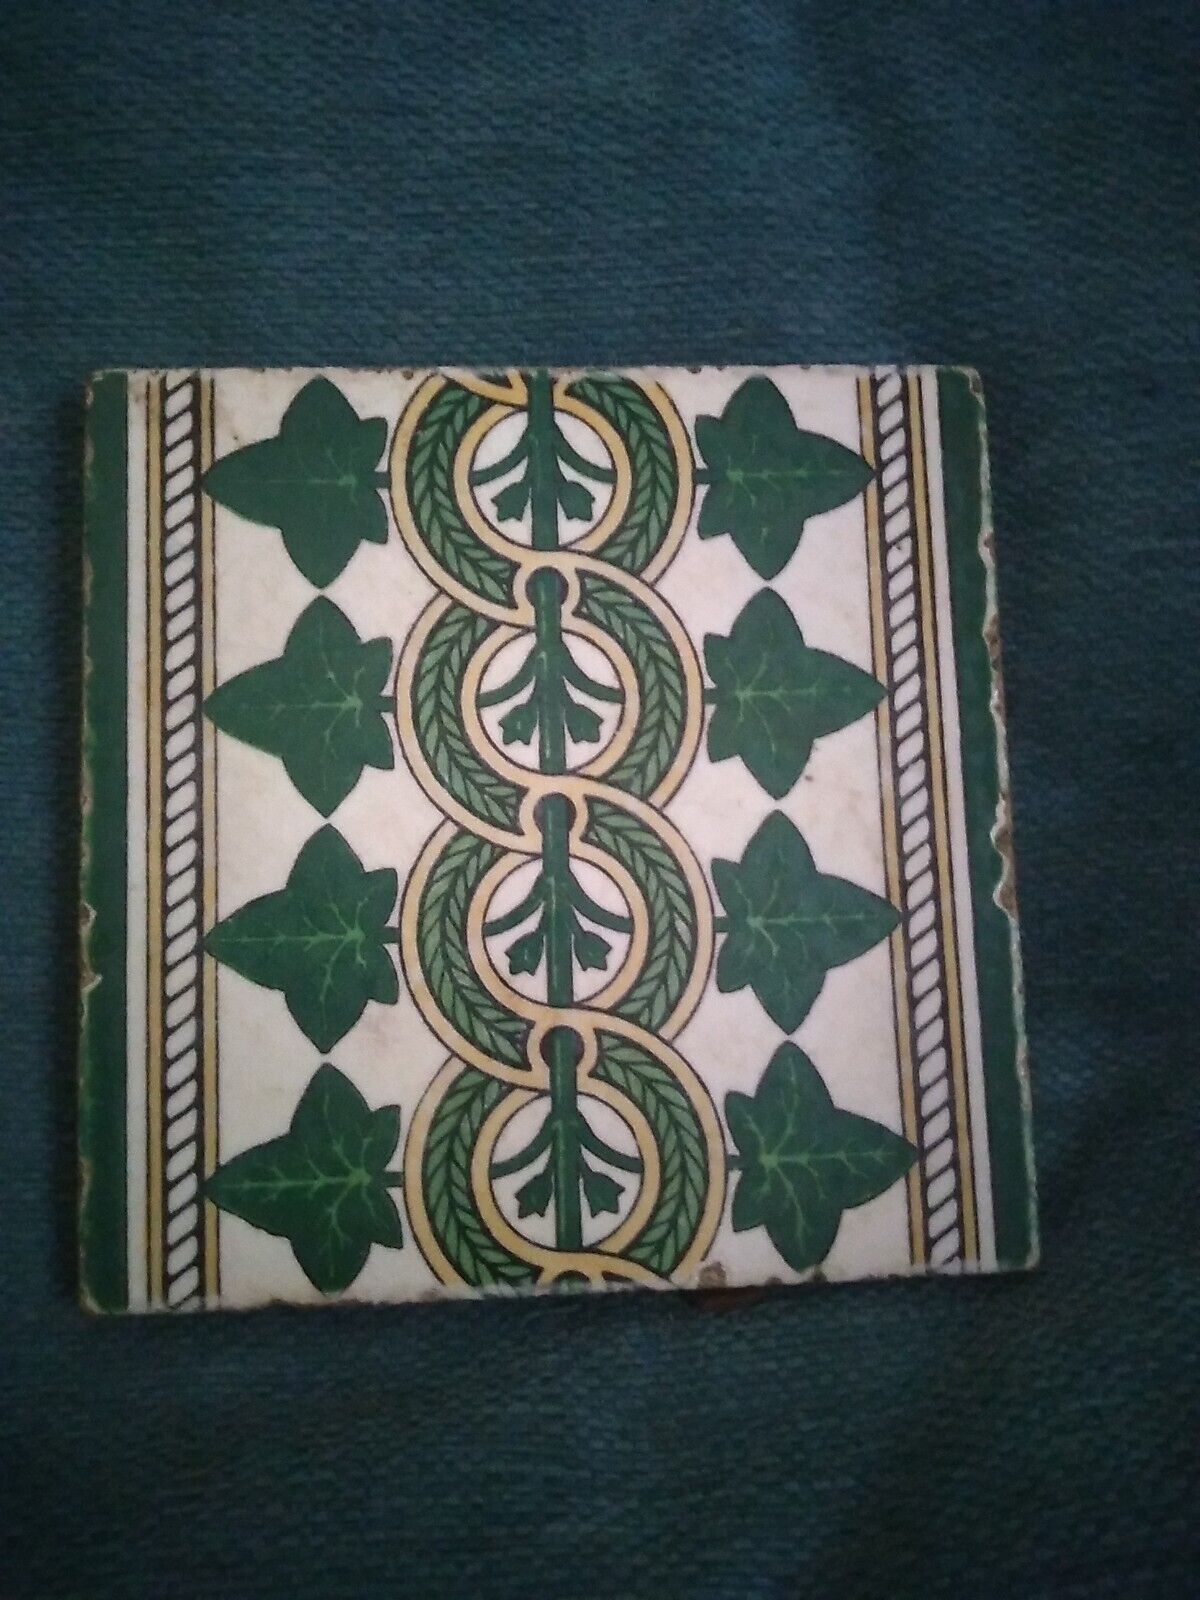 Minton Antique Transfer Print Geometric Patterned Tile Circa 1900s